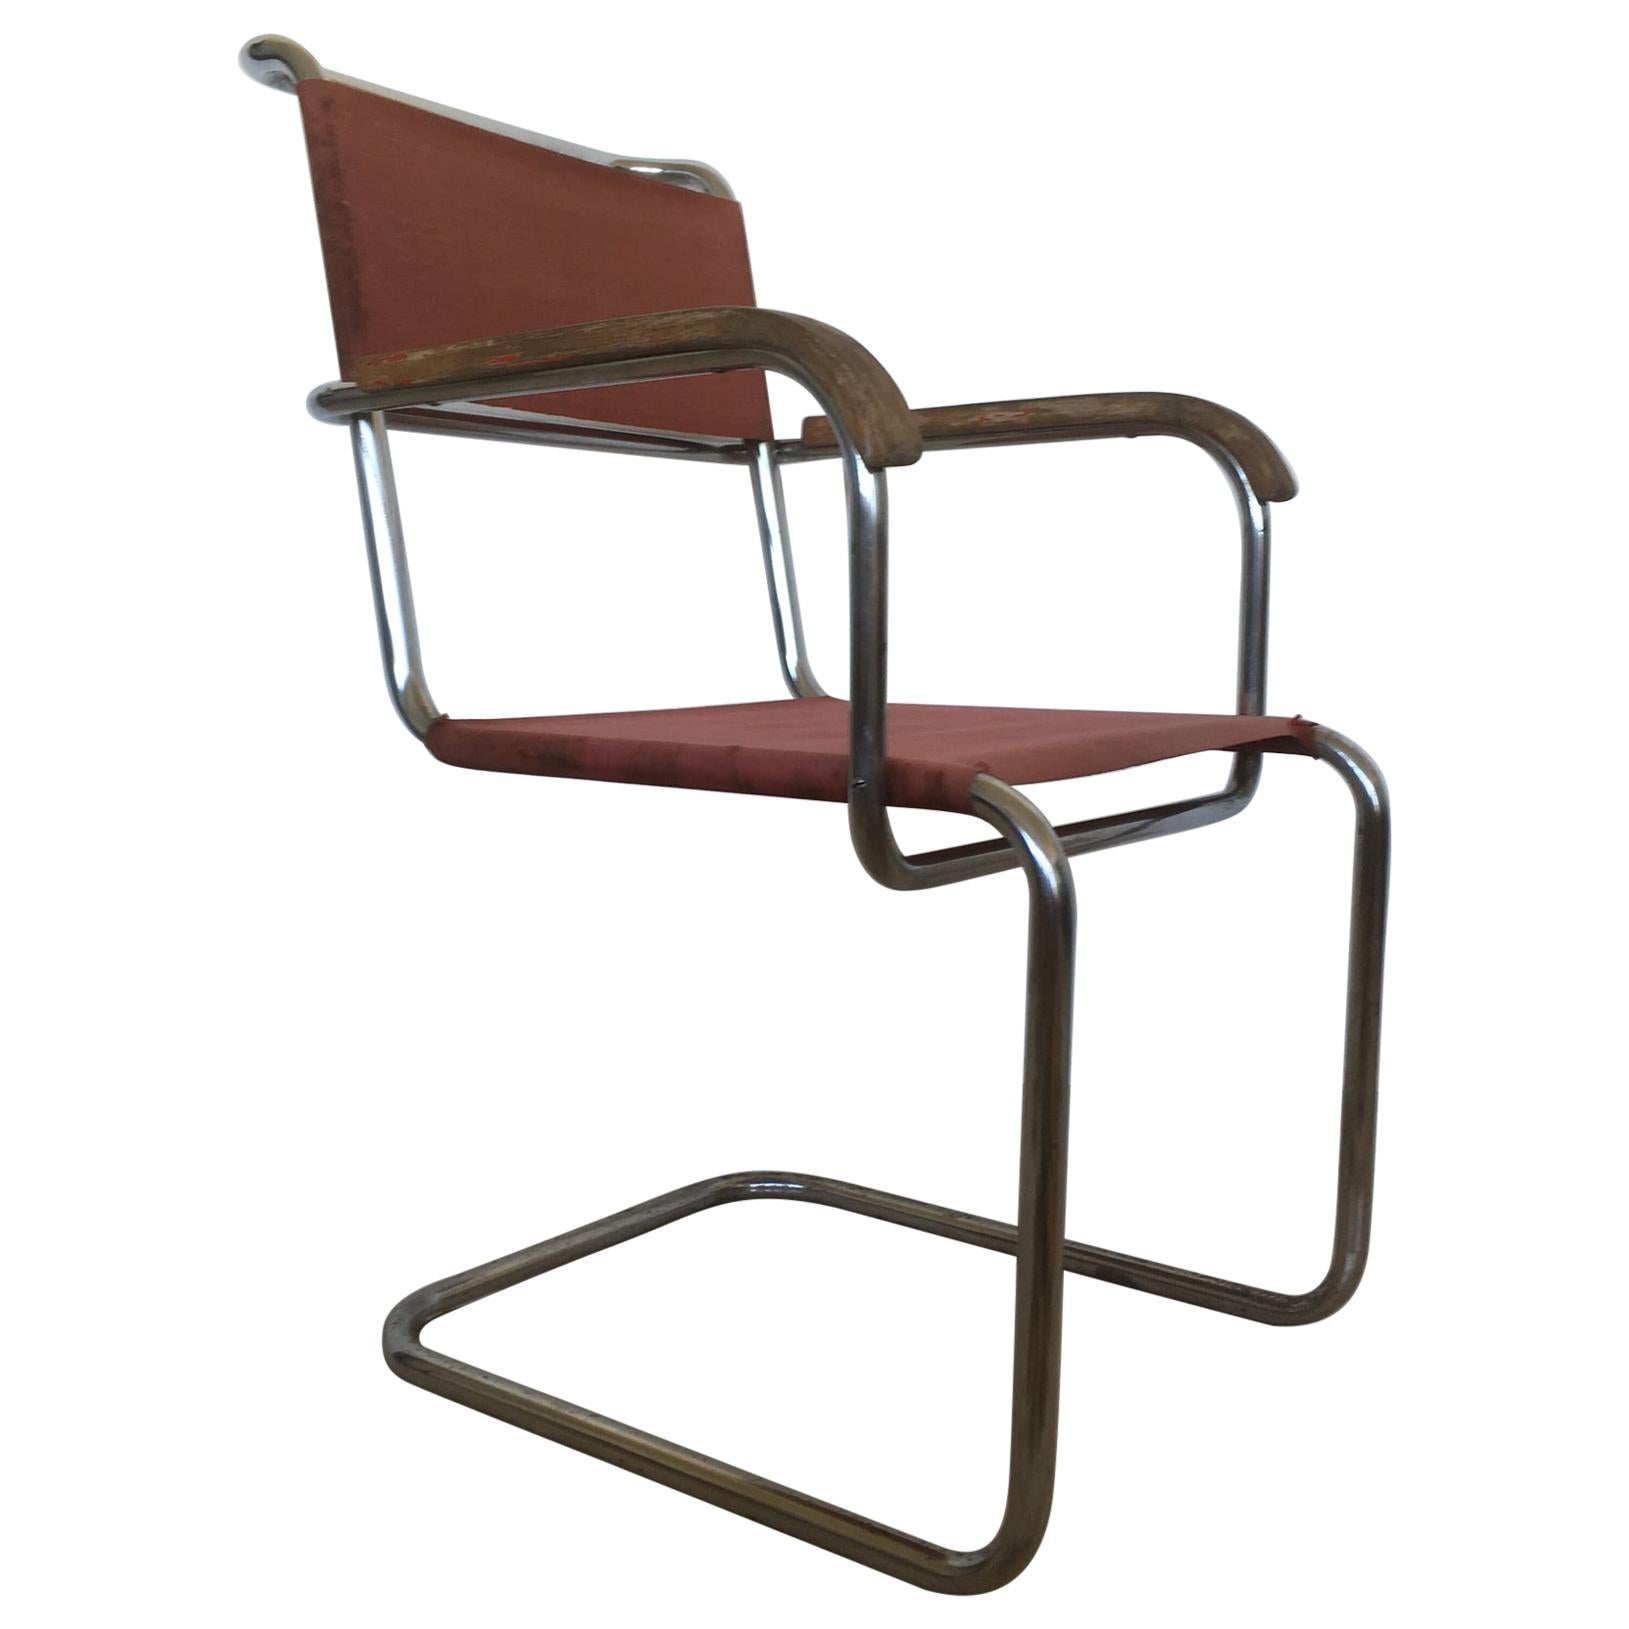 Very Rare Tubular Steel Bauhaus Chrome Chair, 1930s